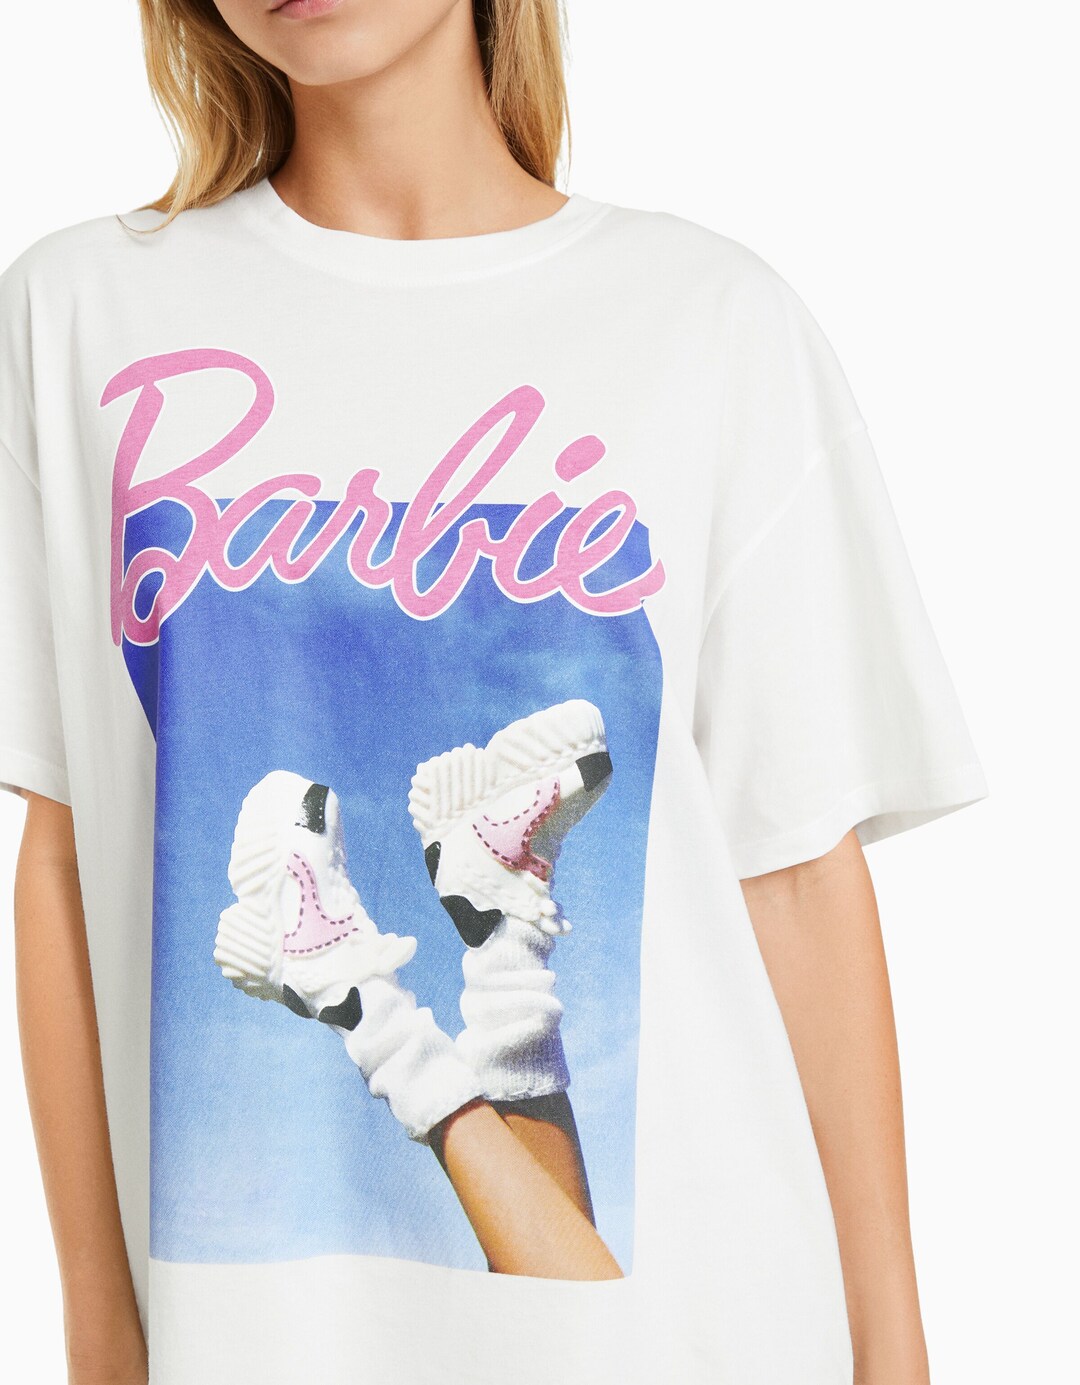 Camiseta Barbie manga corta oversize print